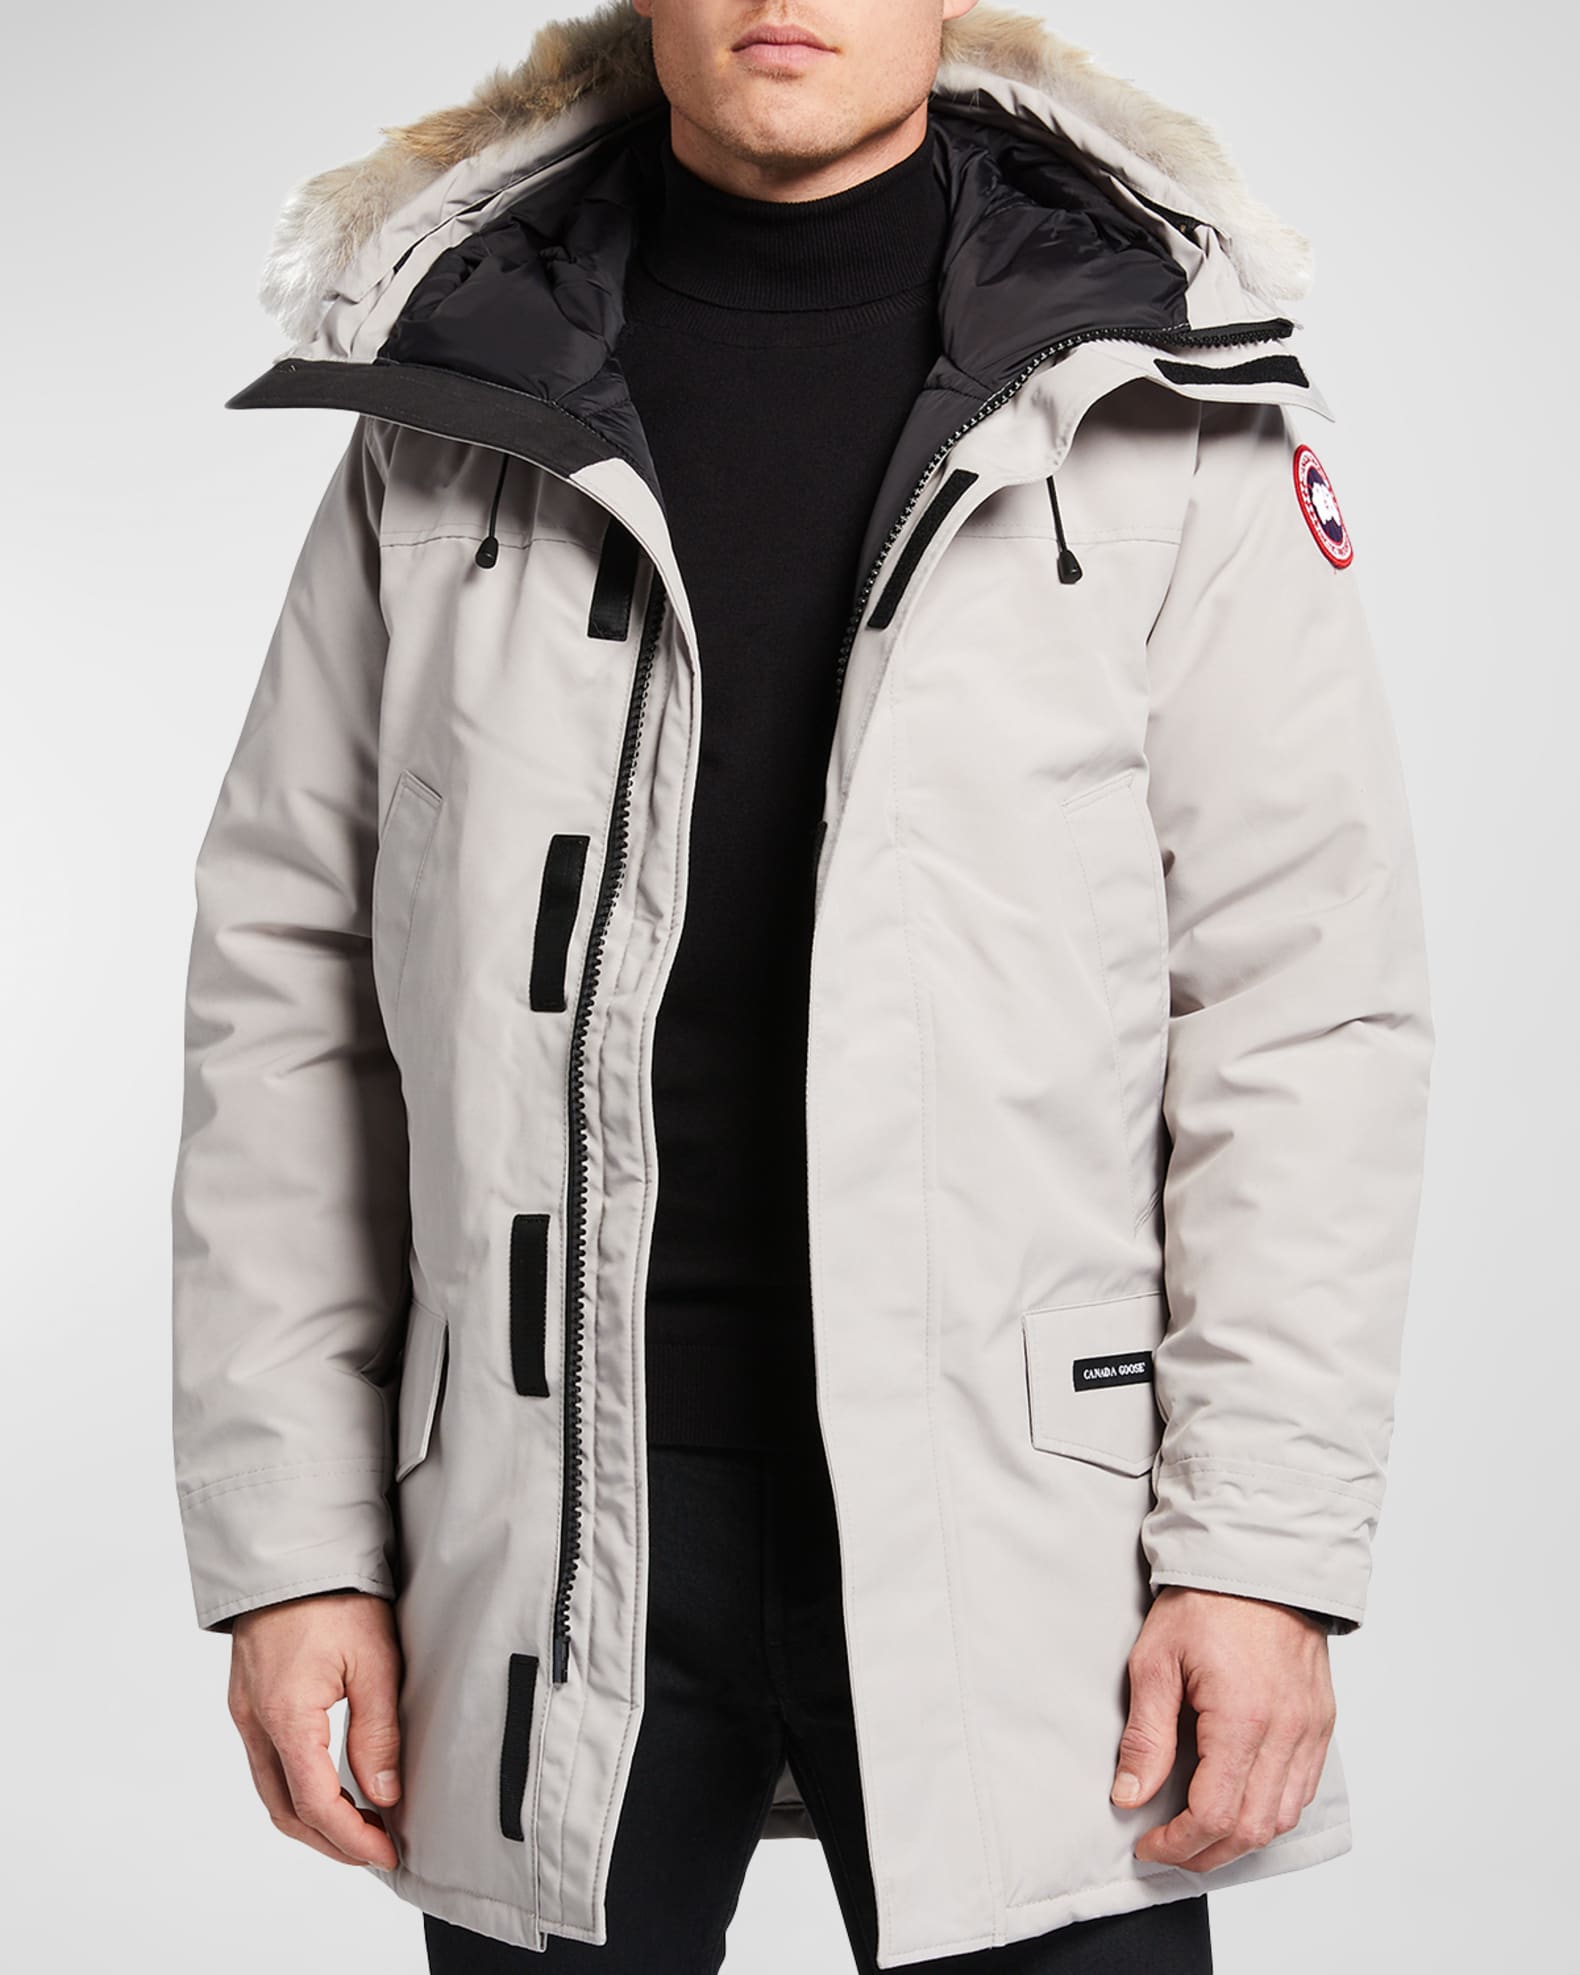 Canada Goose Men S Langford Arctic Tech Parka Jacket With Fur Hood Neiman Marcus